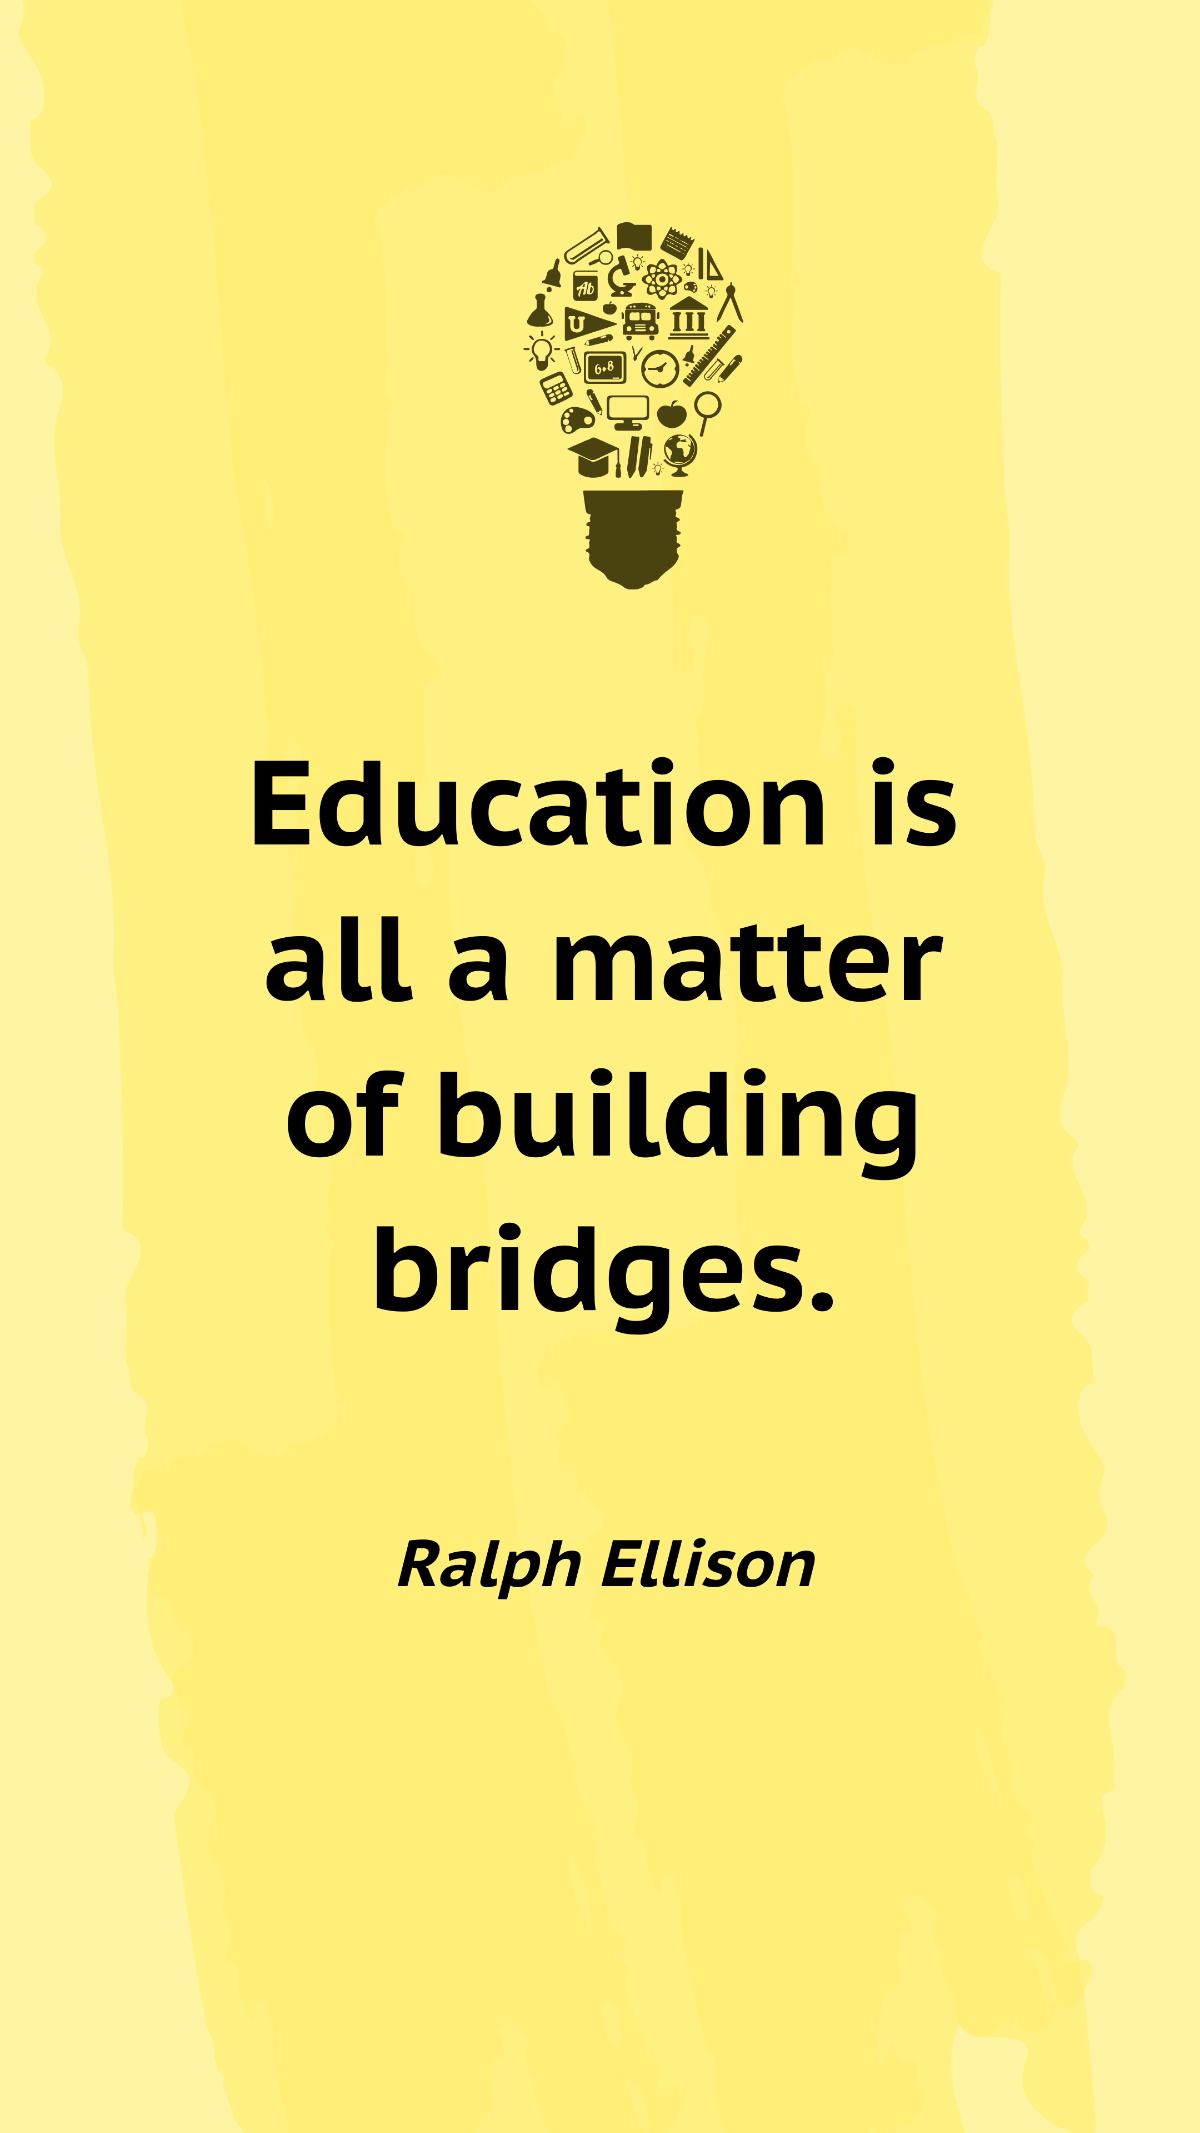 Ralph Ellison - Education is all a matter of building bridges. Template